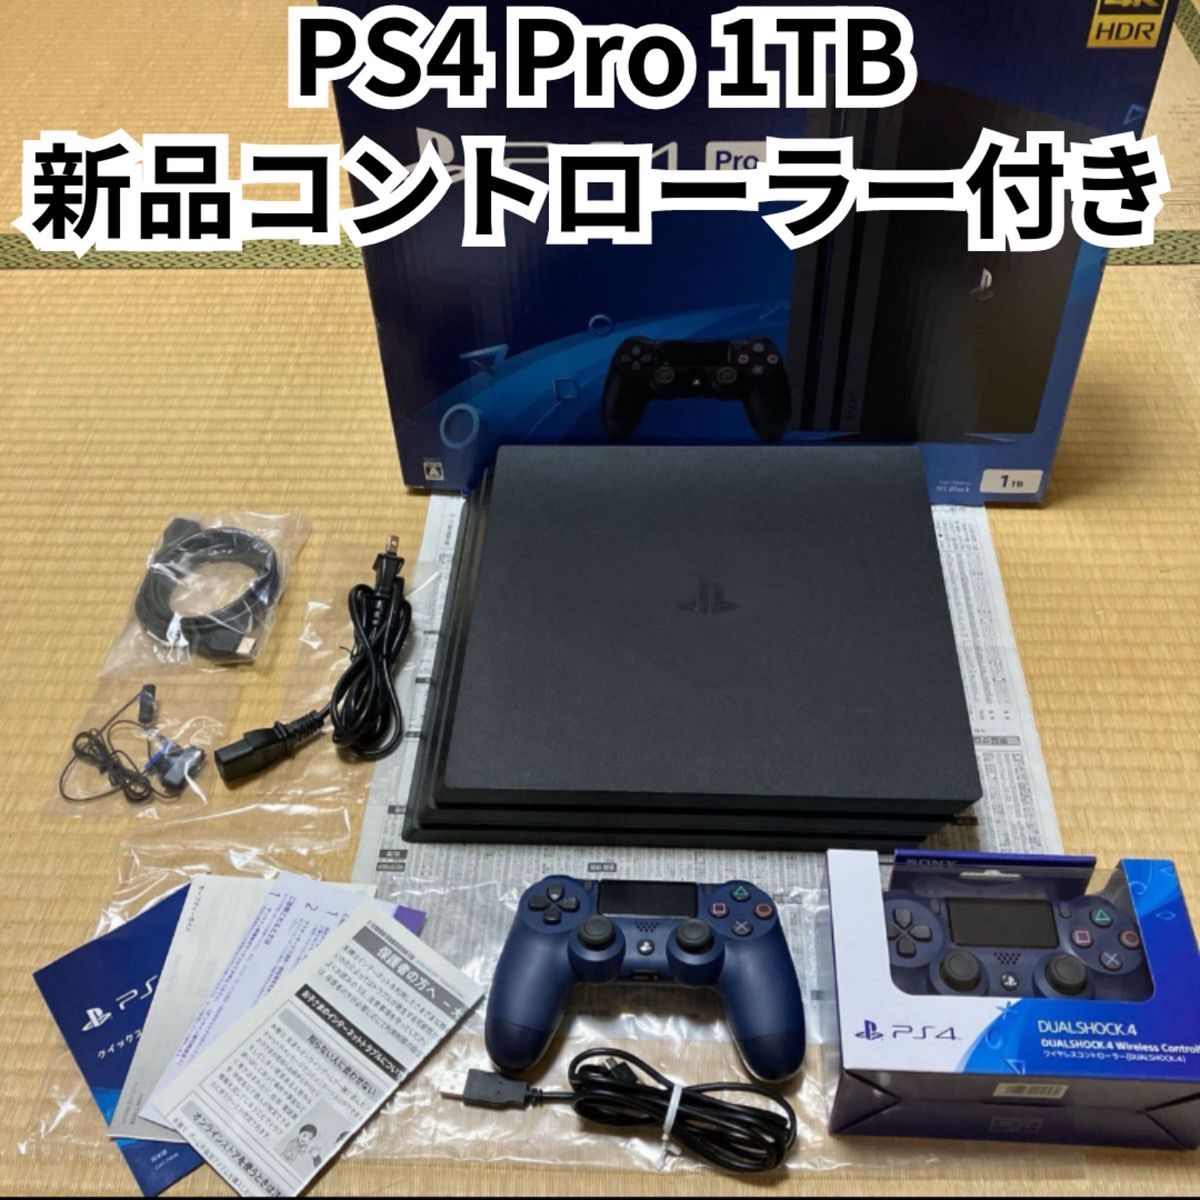 PS4 Pro 1TB + 新品未開封コントローラー CUH-7100BB01 Yahoo!フリマ 